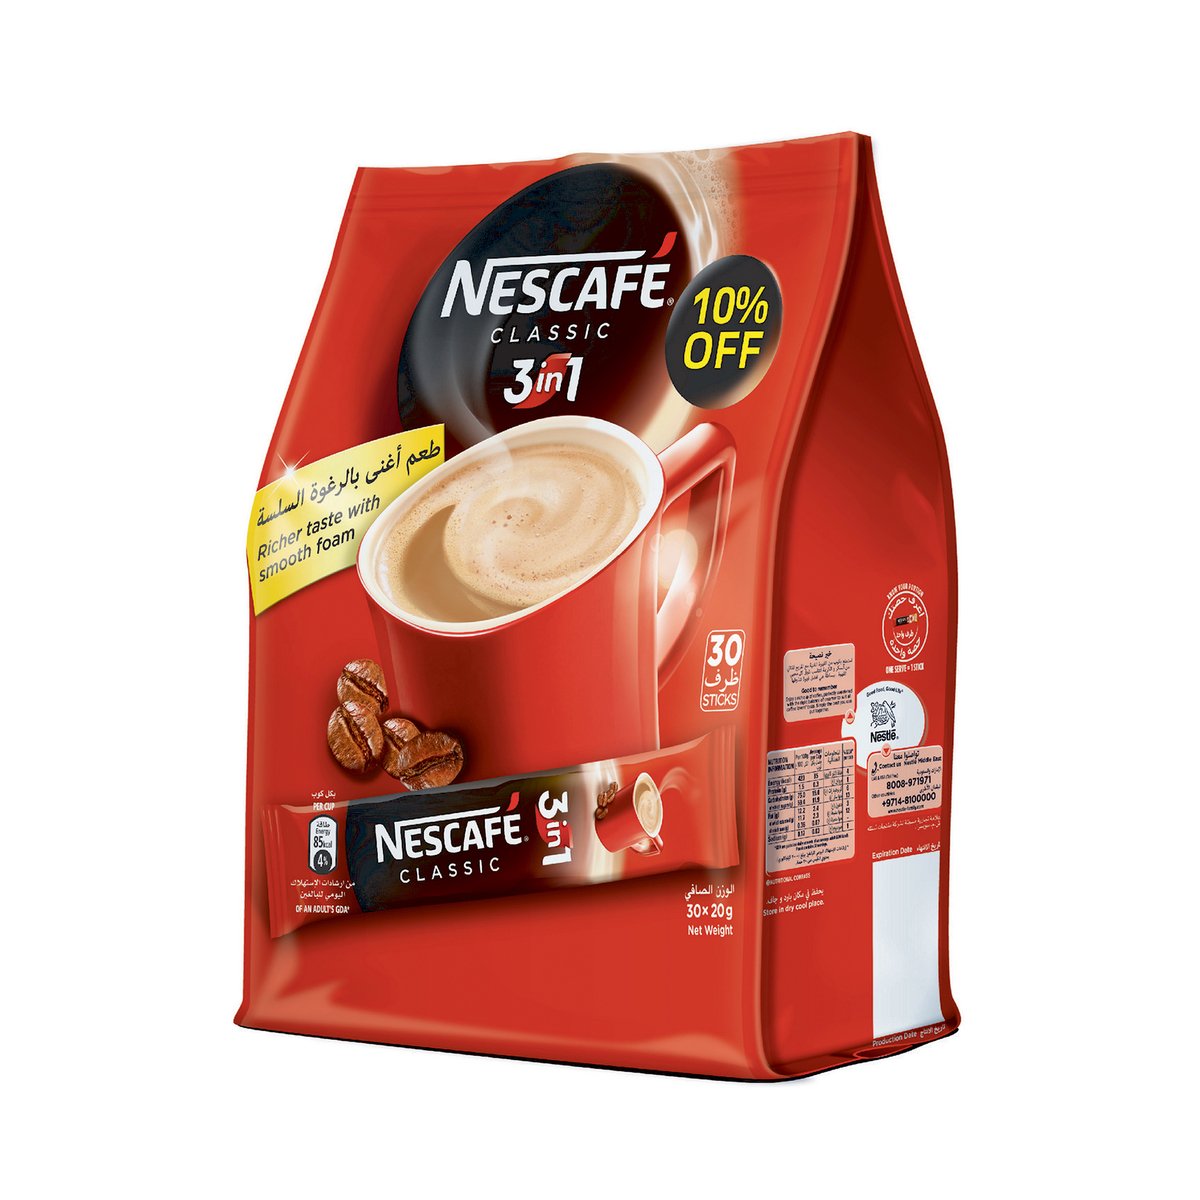 Nescafe Classic 3in1 Instant Coffee 30 x 20g